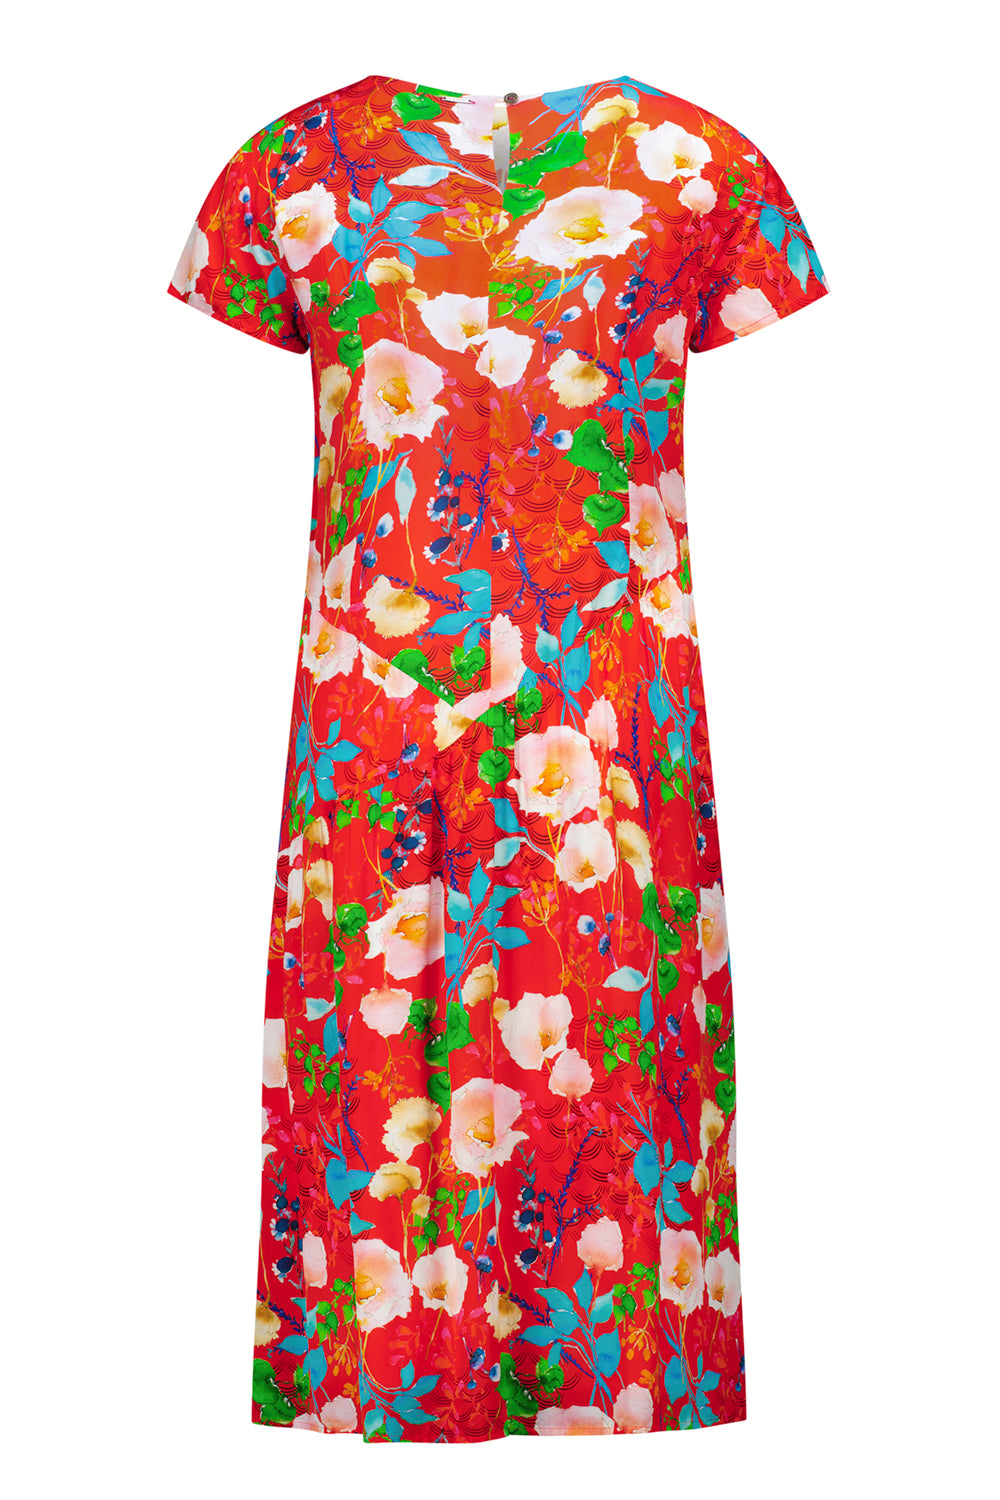 Sakura Dress - Red Floral Print – VERGE